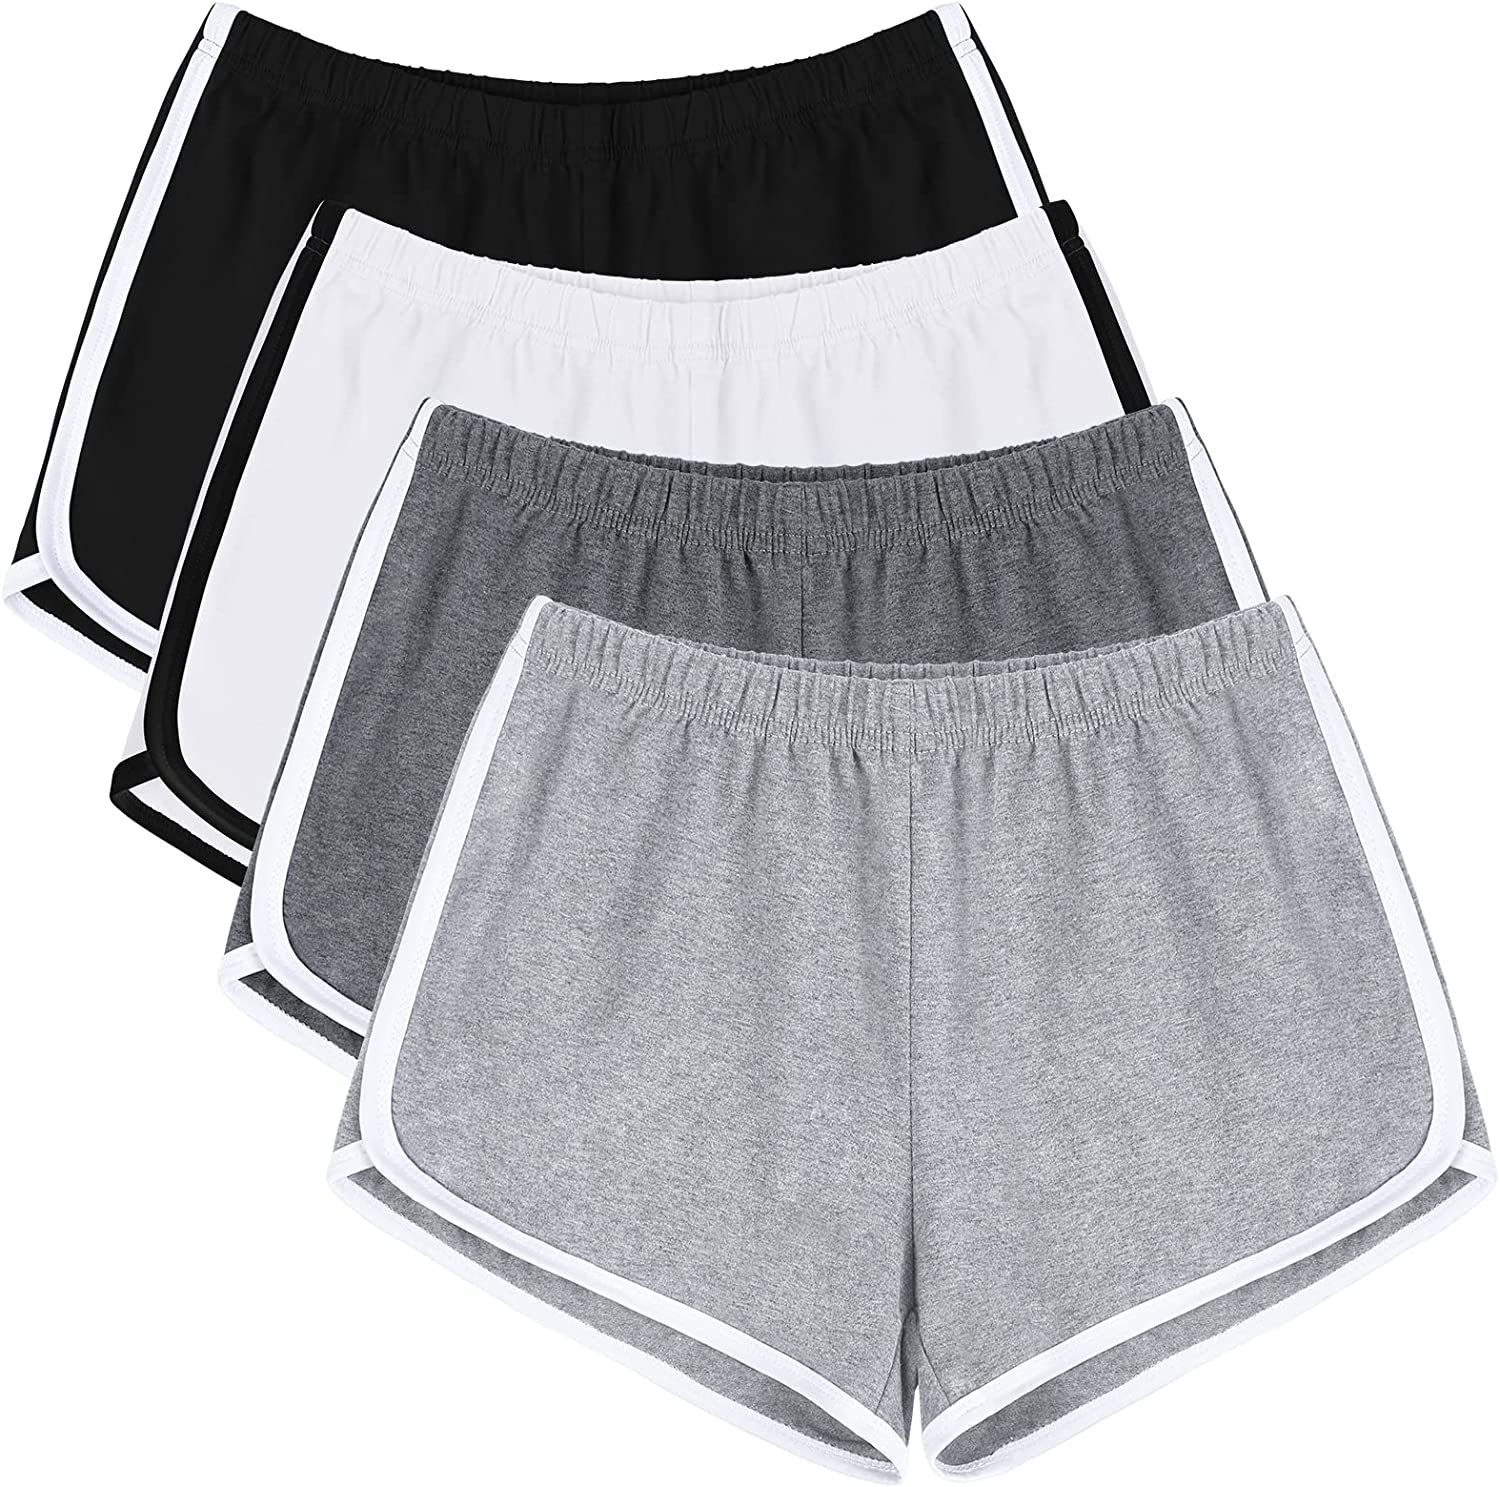 URATOT 3 Pack Running Athletic Shorts Yoga Short Pants Women Gym Dance Workout Shorts 